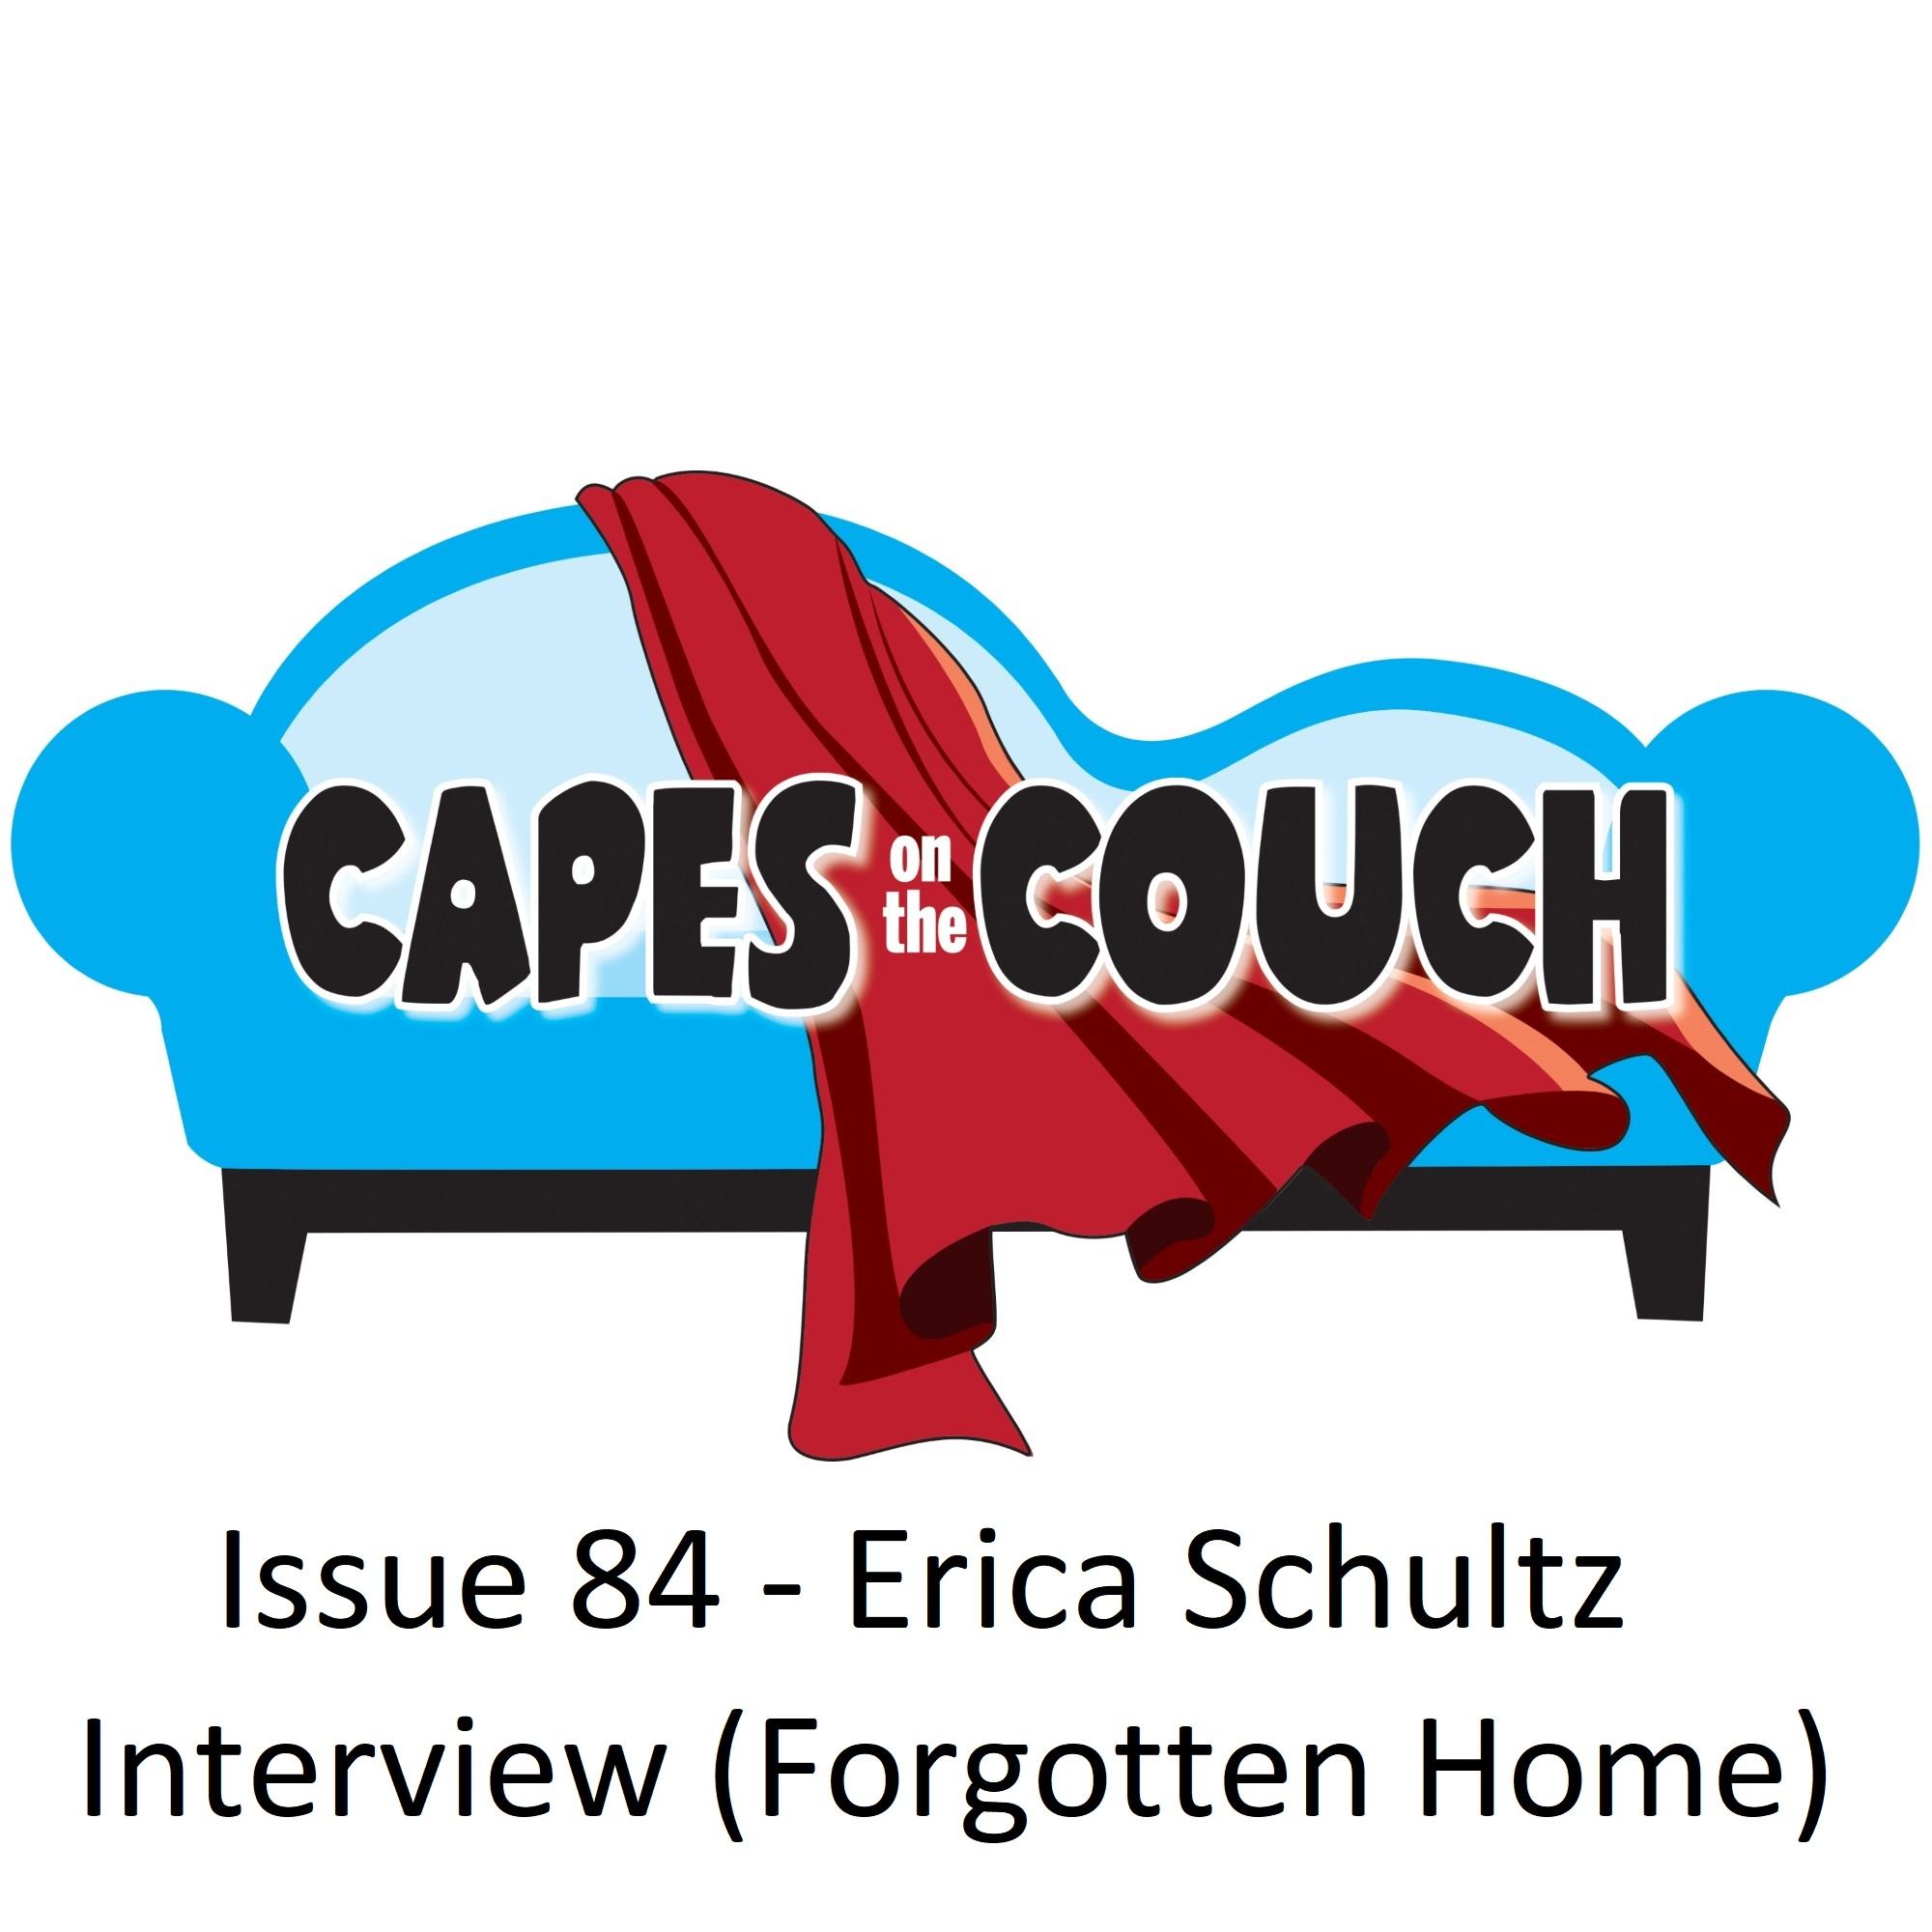 Issue 84 – Erica Schultz (Forgotten Home) post thumbnail image